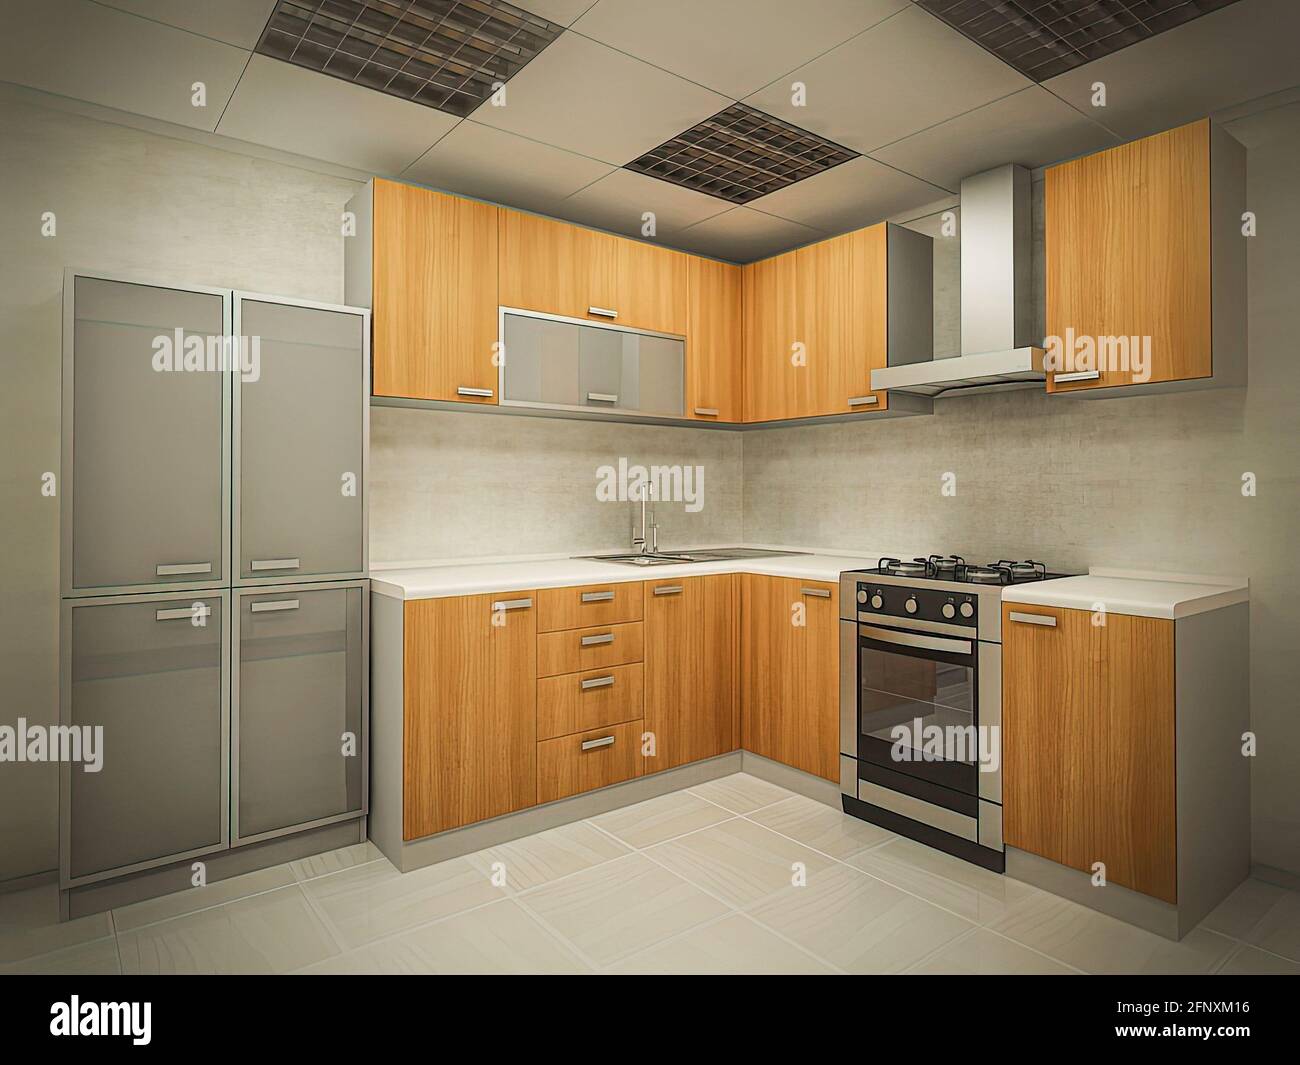 20d illustration of modern kitchen design concept in traditional ...